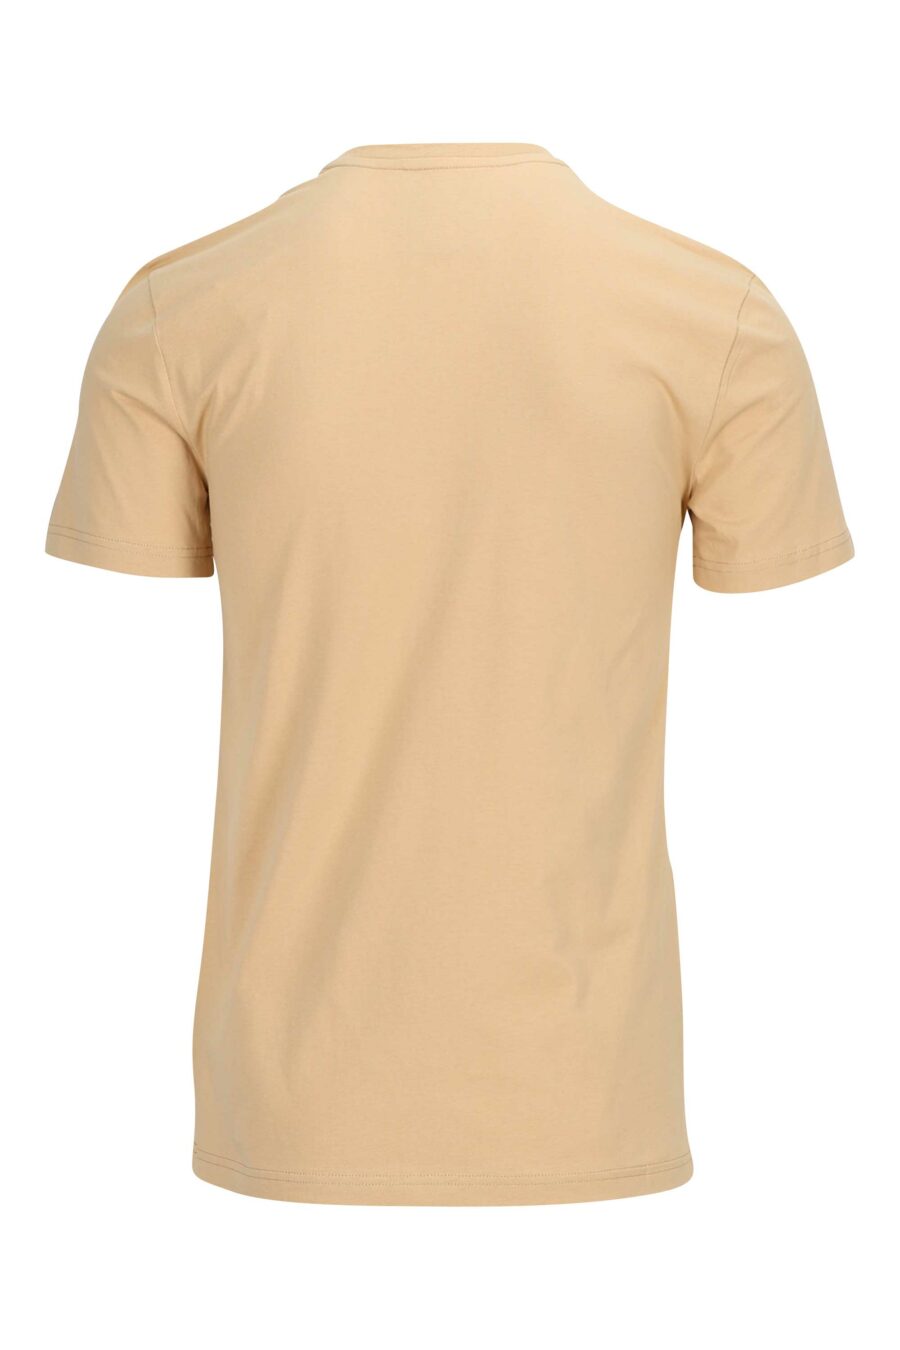 Camiseta beige con maxilogo negro - 889316934694 1